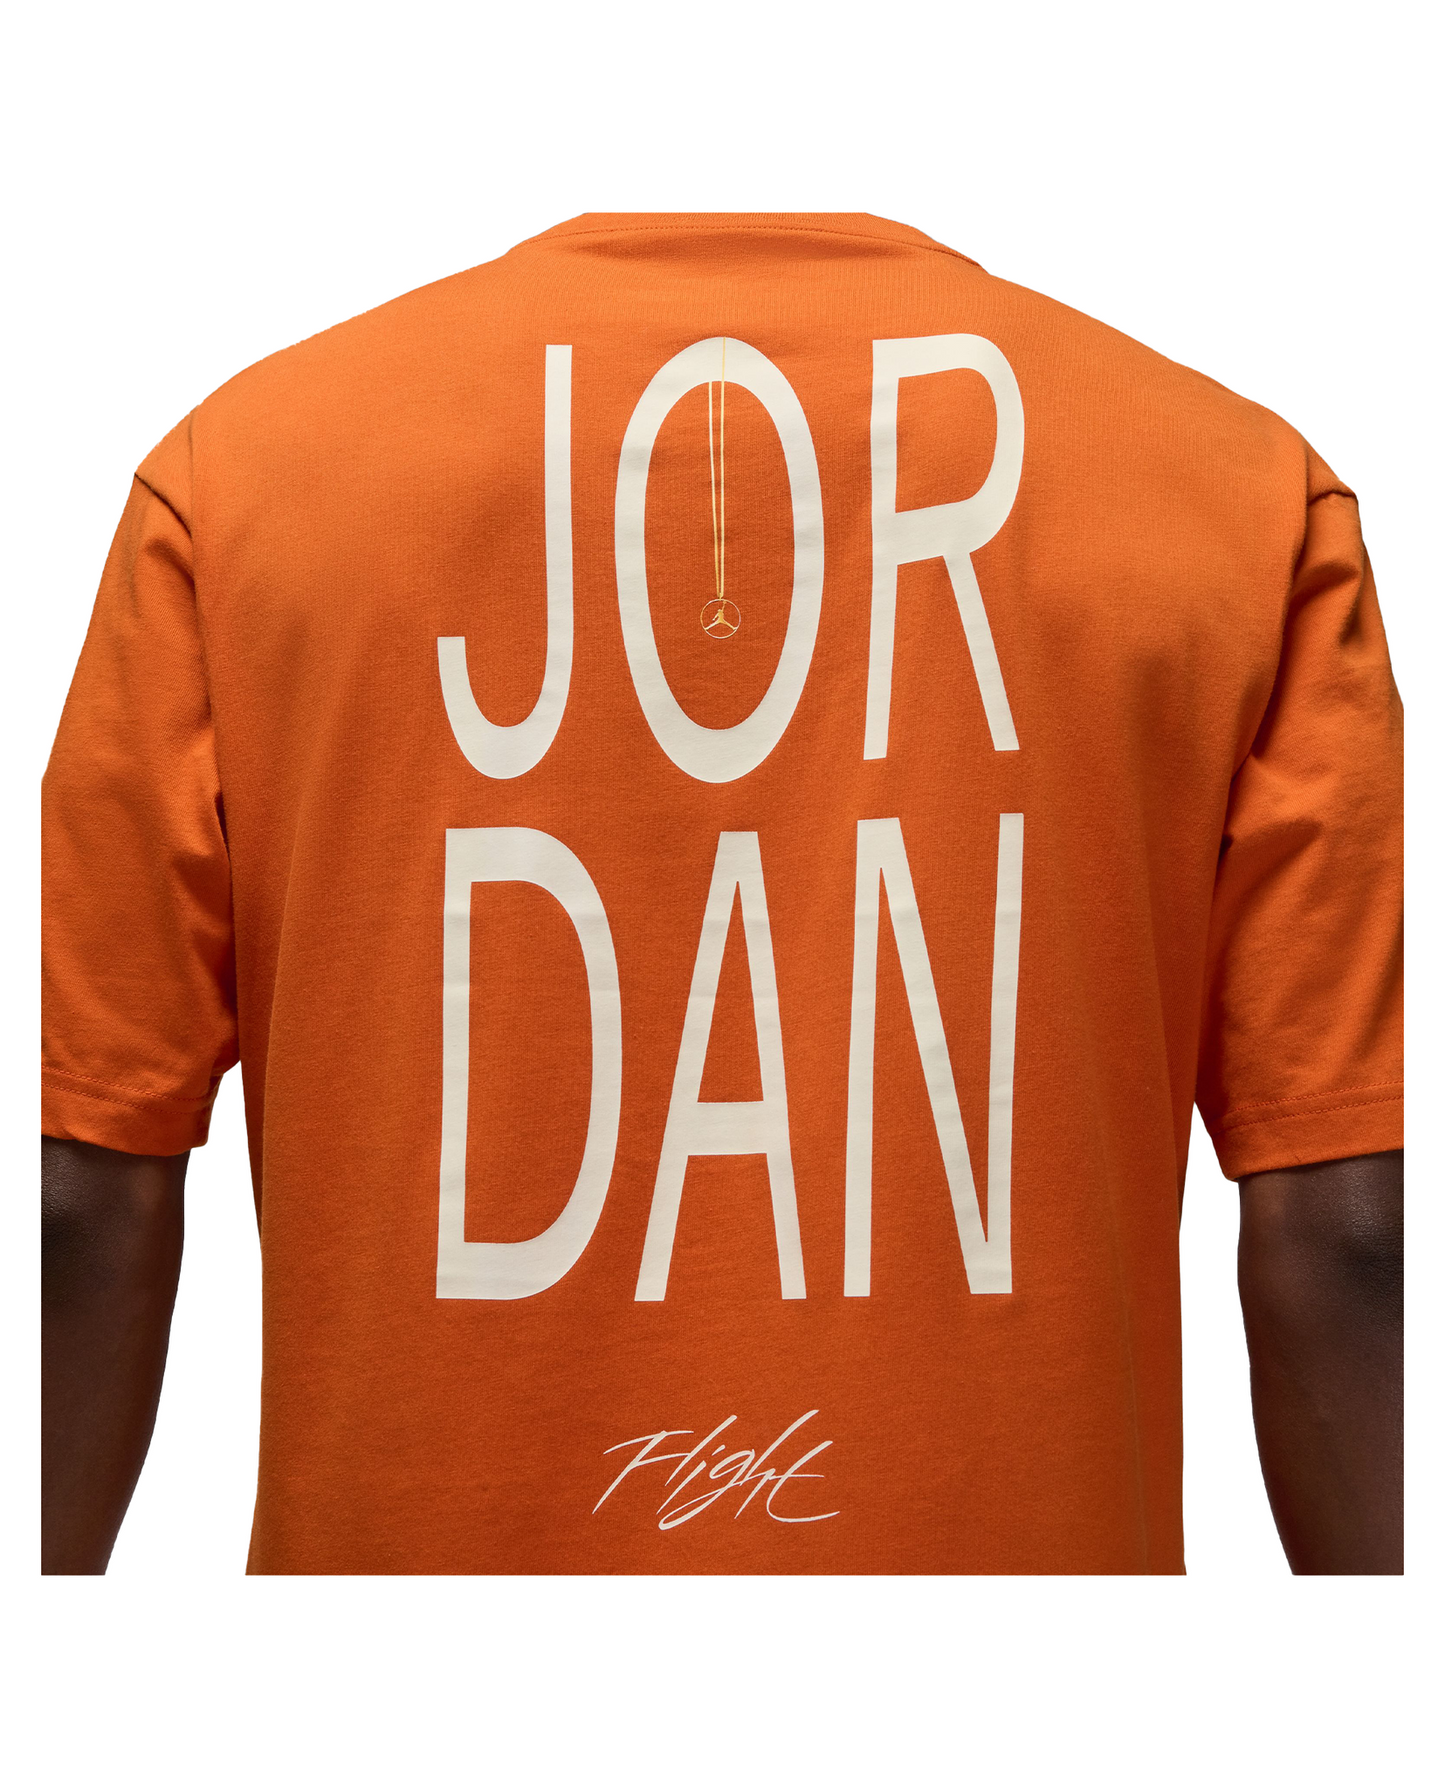 
                    
                      Jordan Artist Series by Darien Birks Men's Tee Shirt
                    
                  